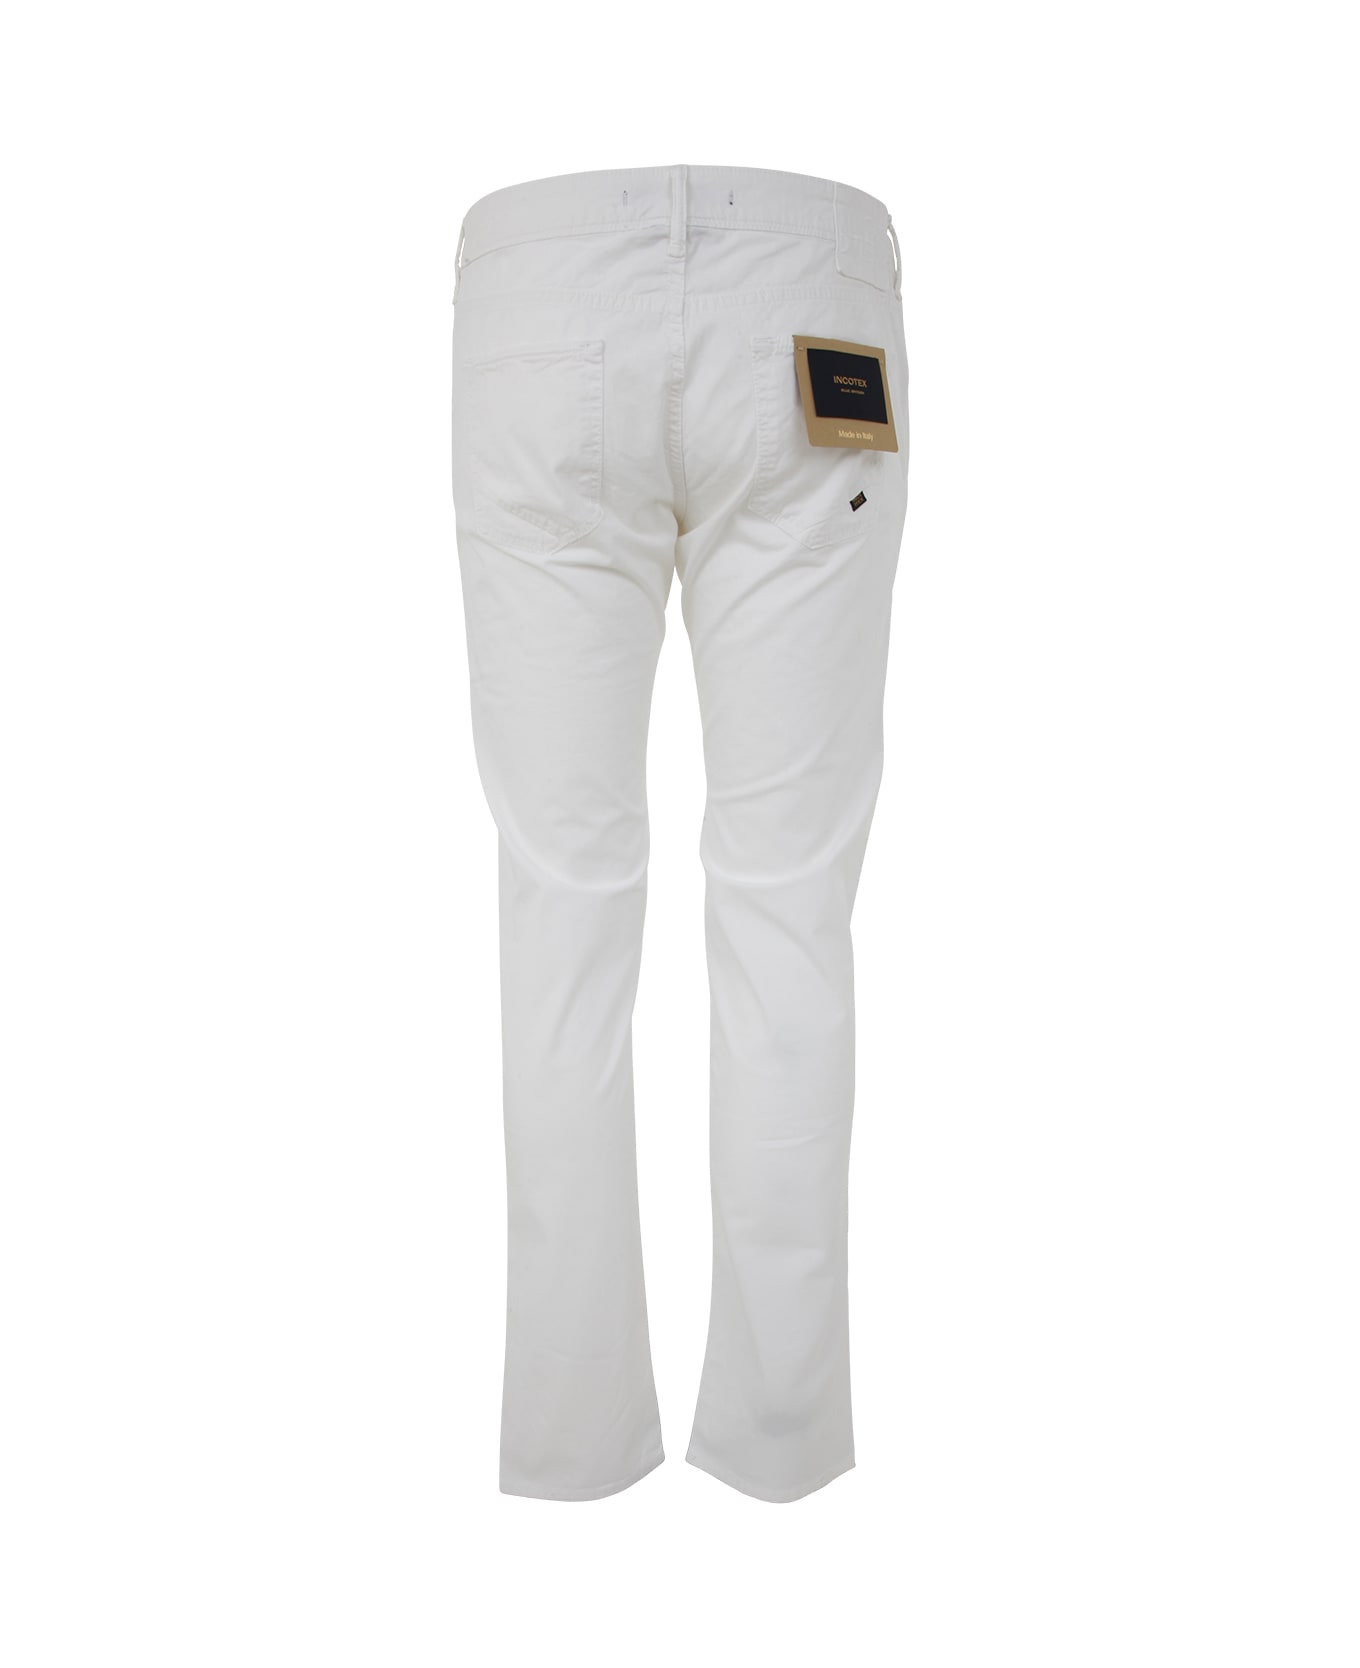 Incotex Genjc Five Pocket Solid Jeans - Optical White ボトムス